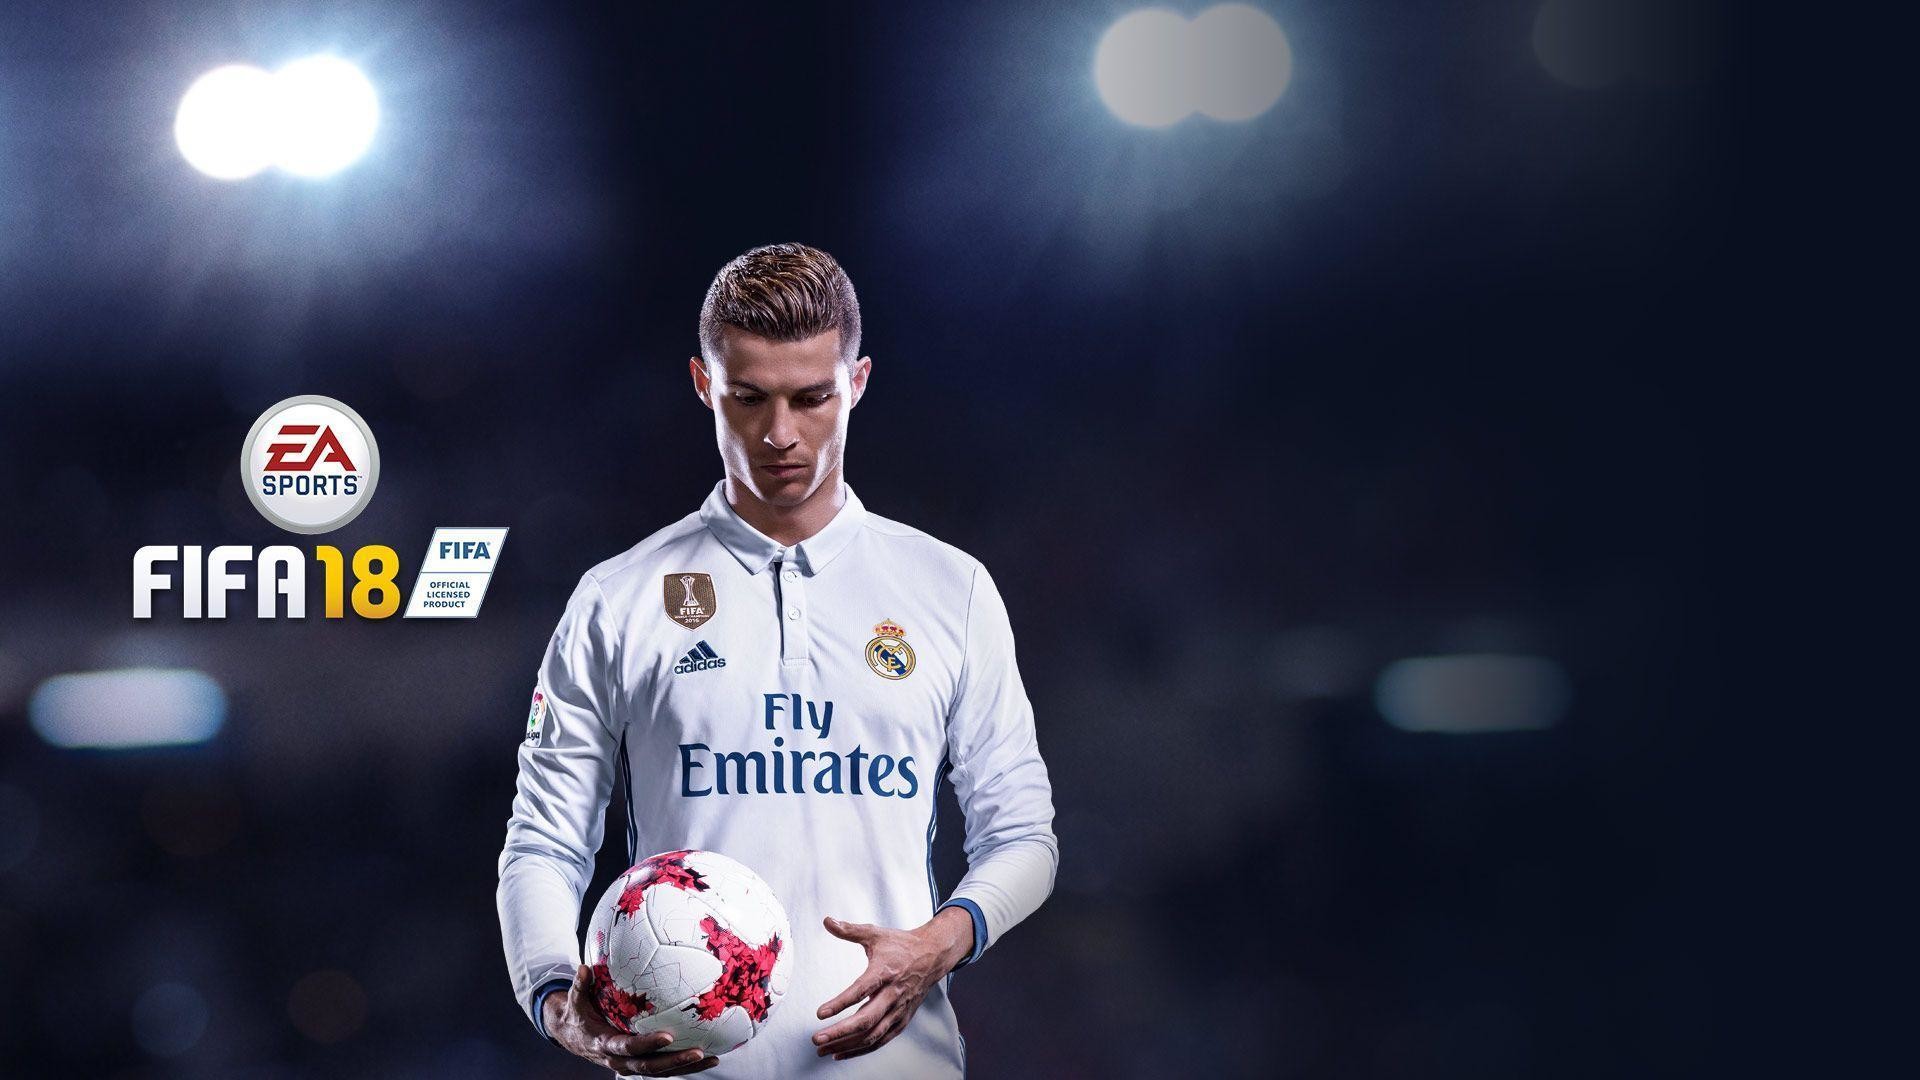 1920x1080 FIFA 18 Cover Star Cristiano Ronaldo - High Definition Cover .